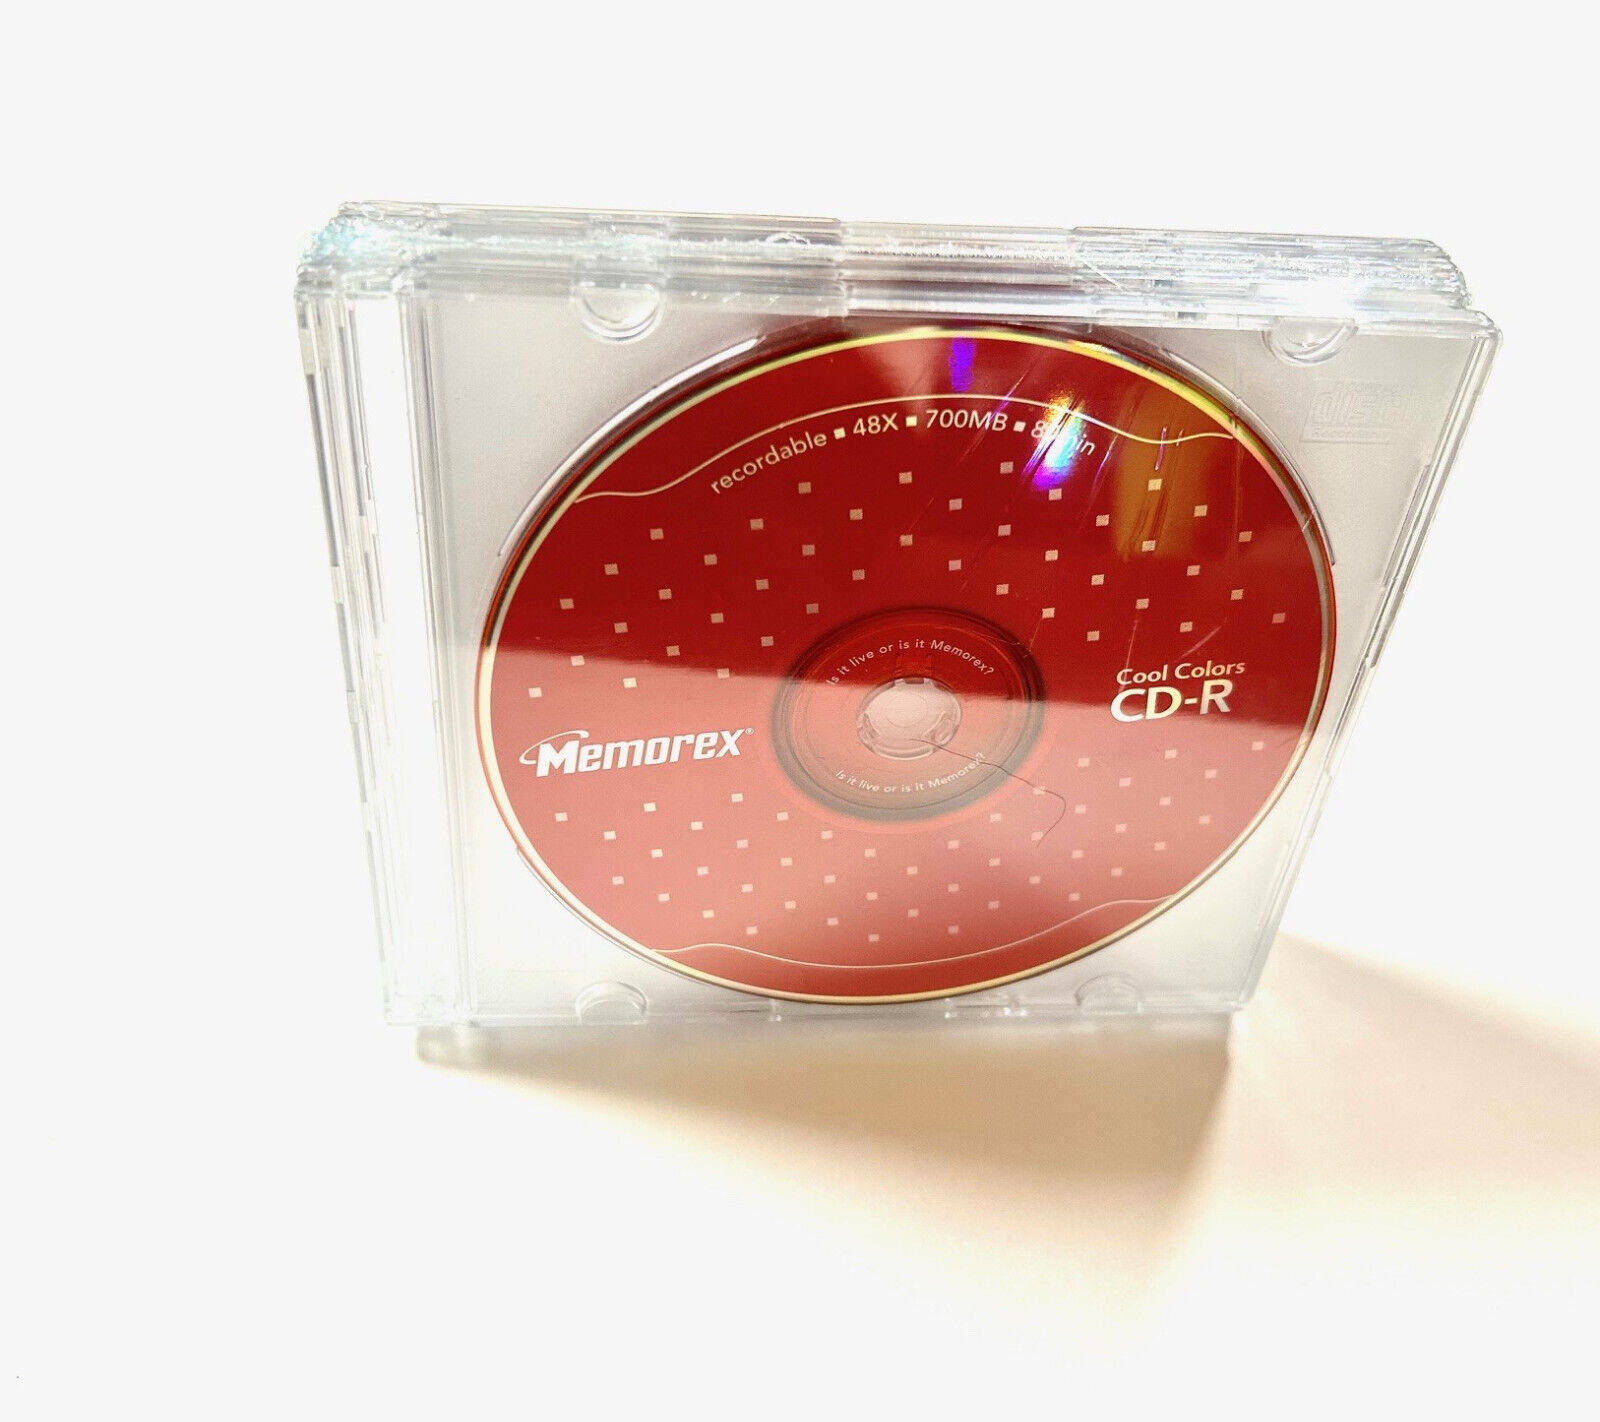 Memorex CD-R 6 Pack COOL COLORS 80Min RED Brand New Open BOX Slimline Jewel Case